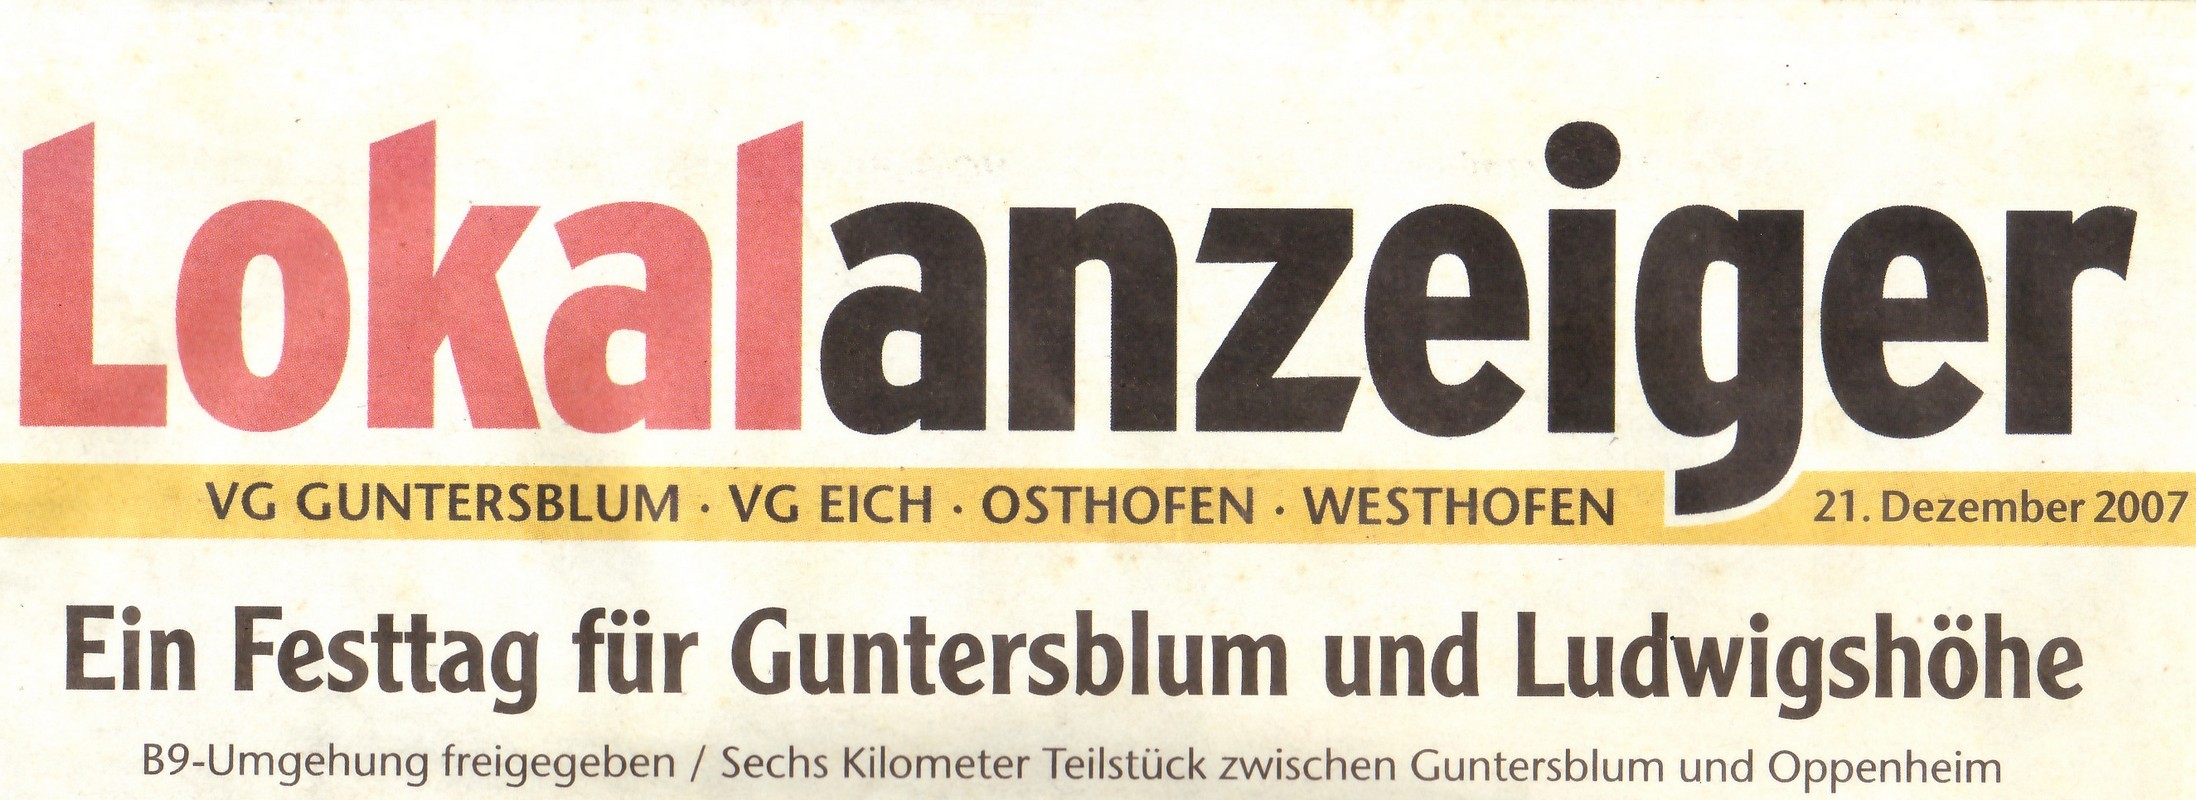 Lokalanzeiger VG Guntersblum - VG Eich - Osthofen - Westhofen (Kulturverein Guntersblum CC BY-NC-SA)